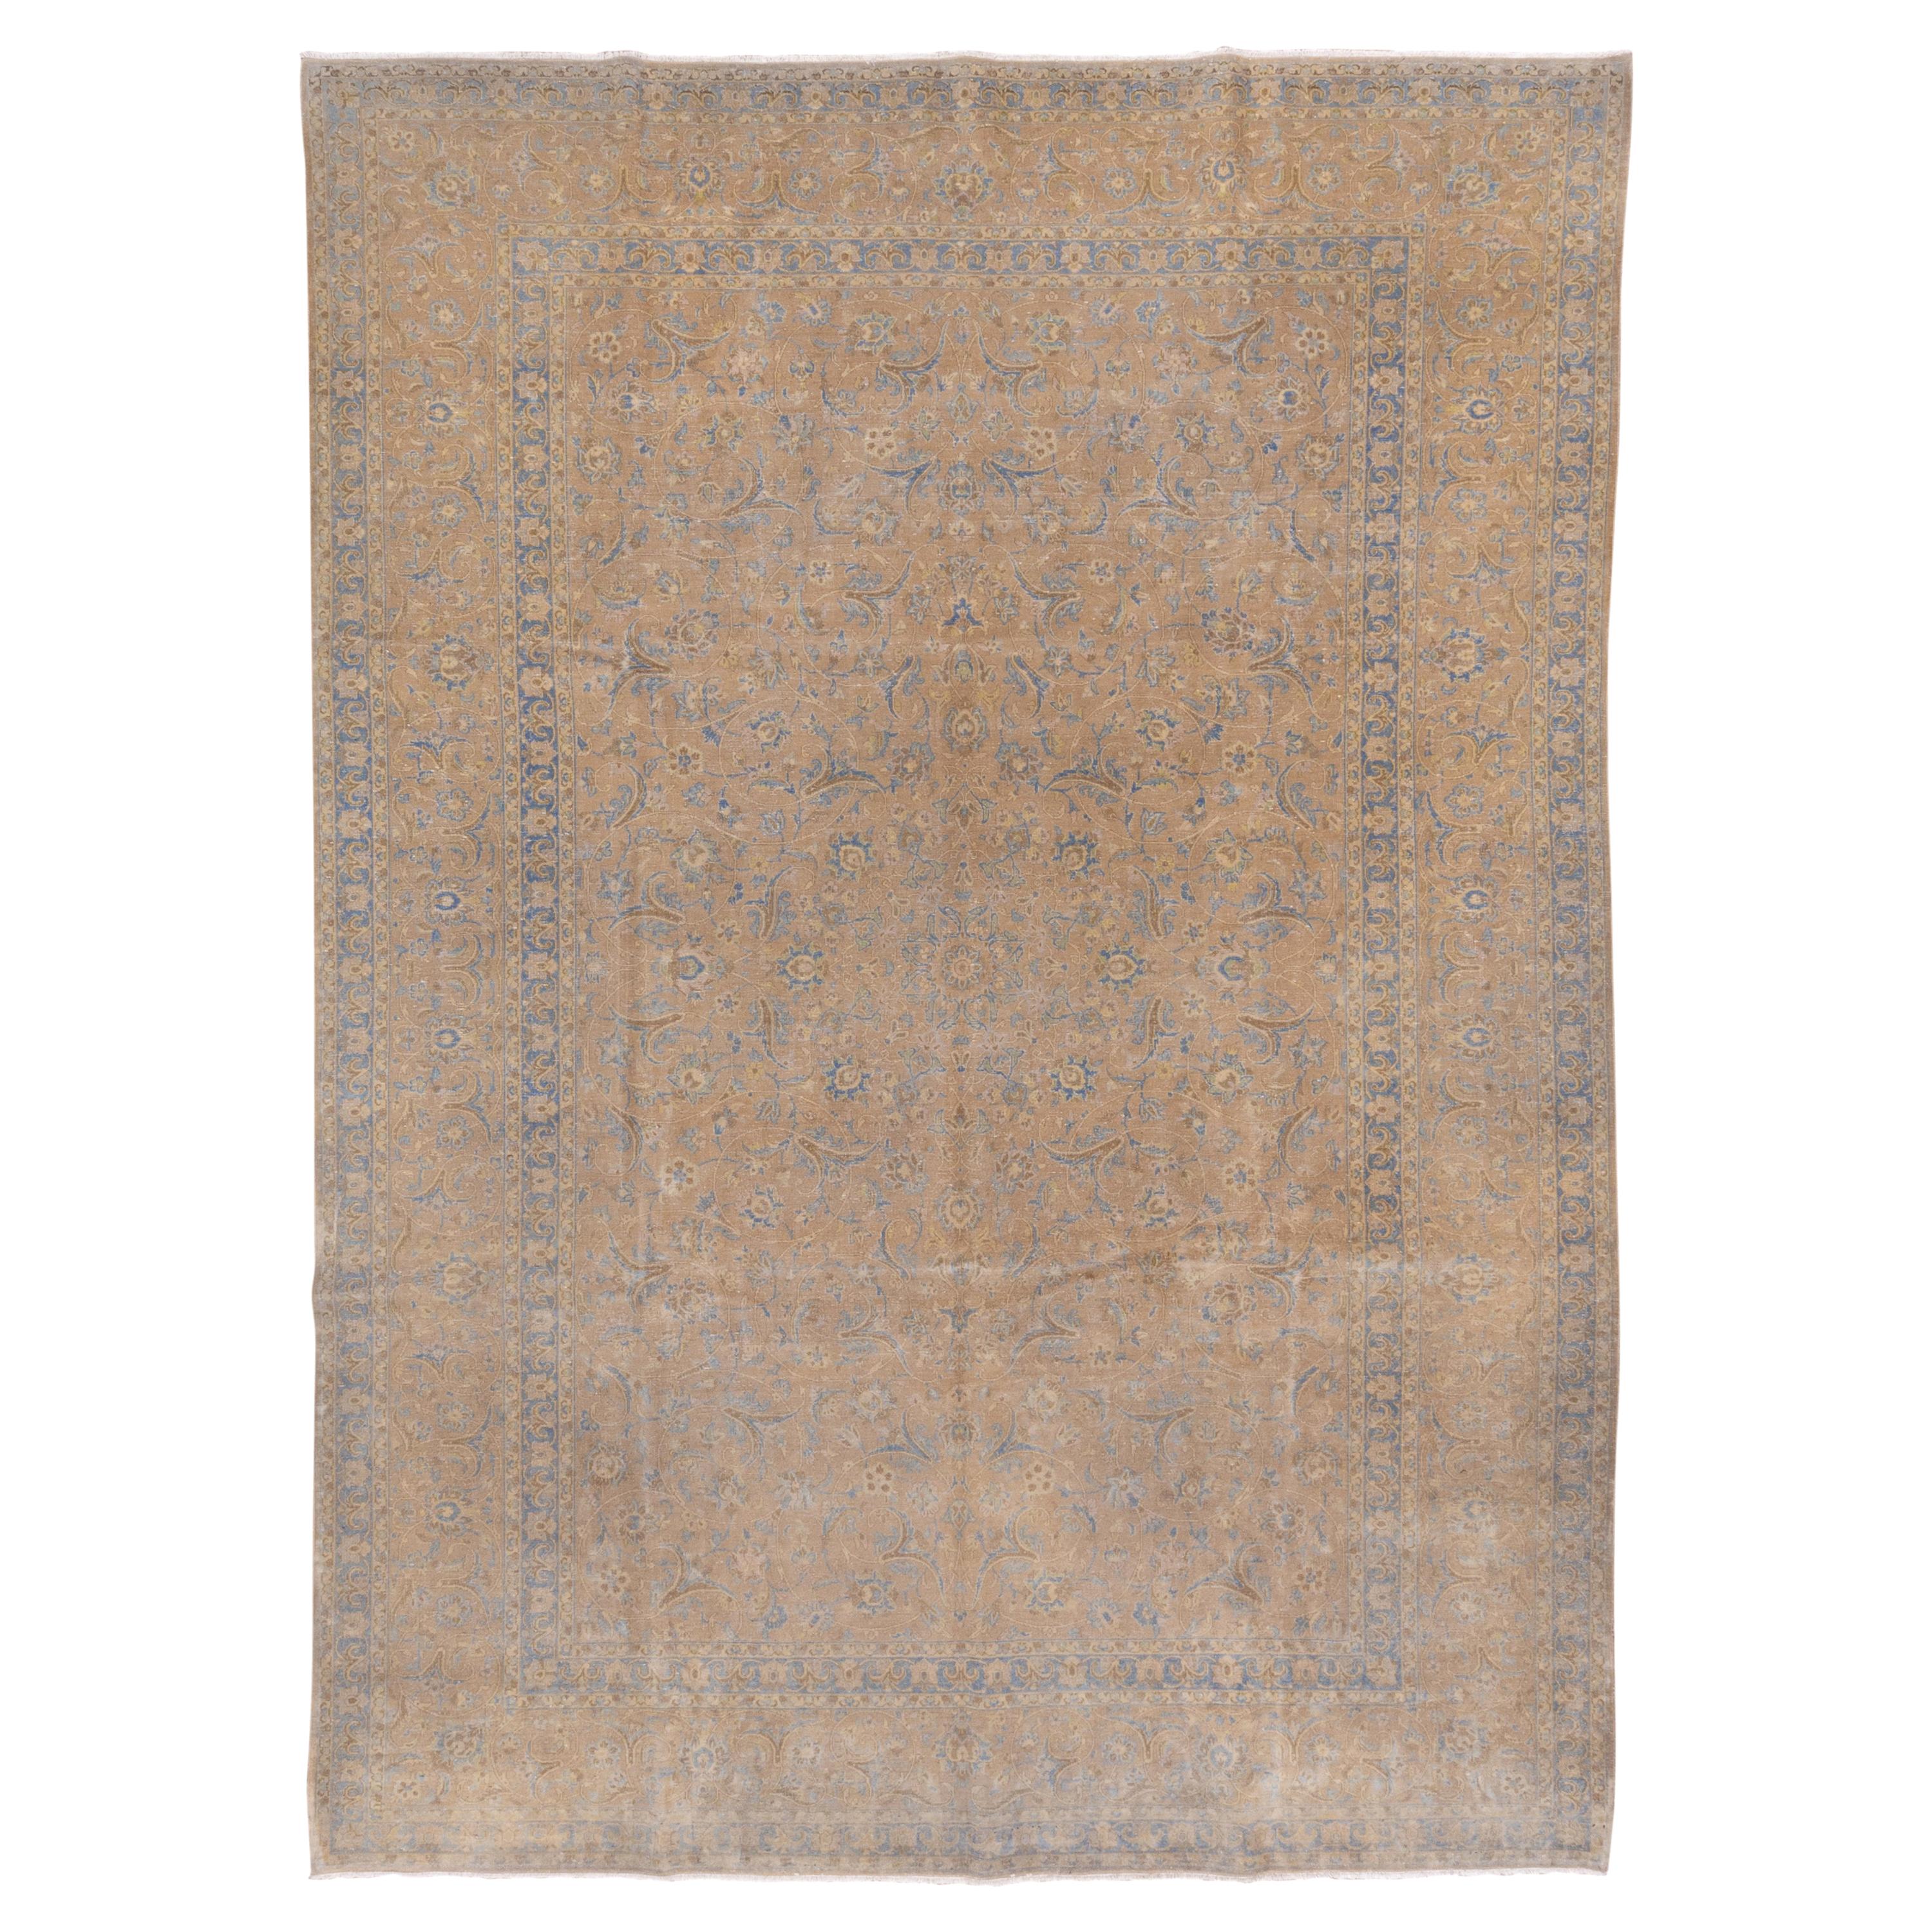 Antique Beige Fine Persian Kashan Carpet, circa 1930s